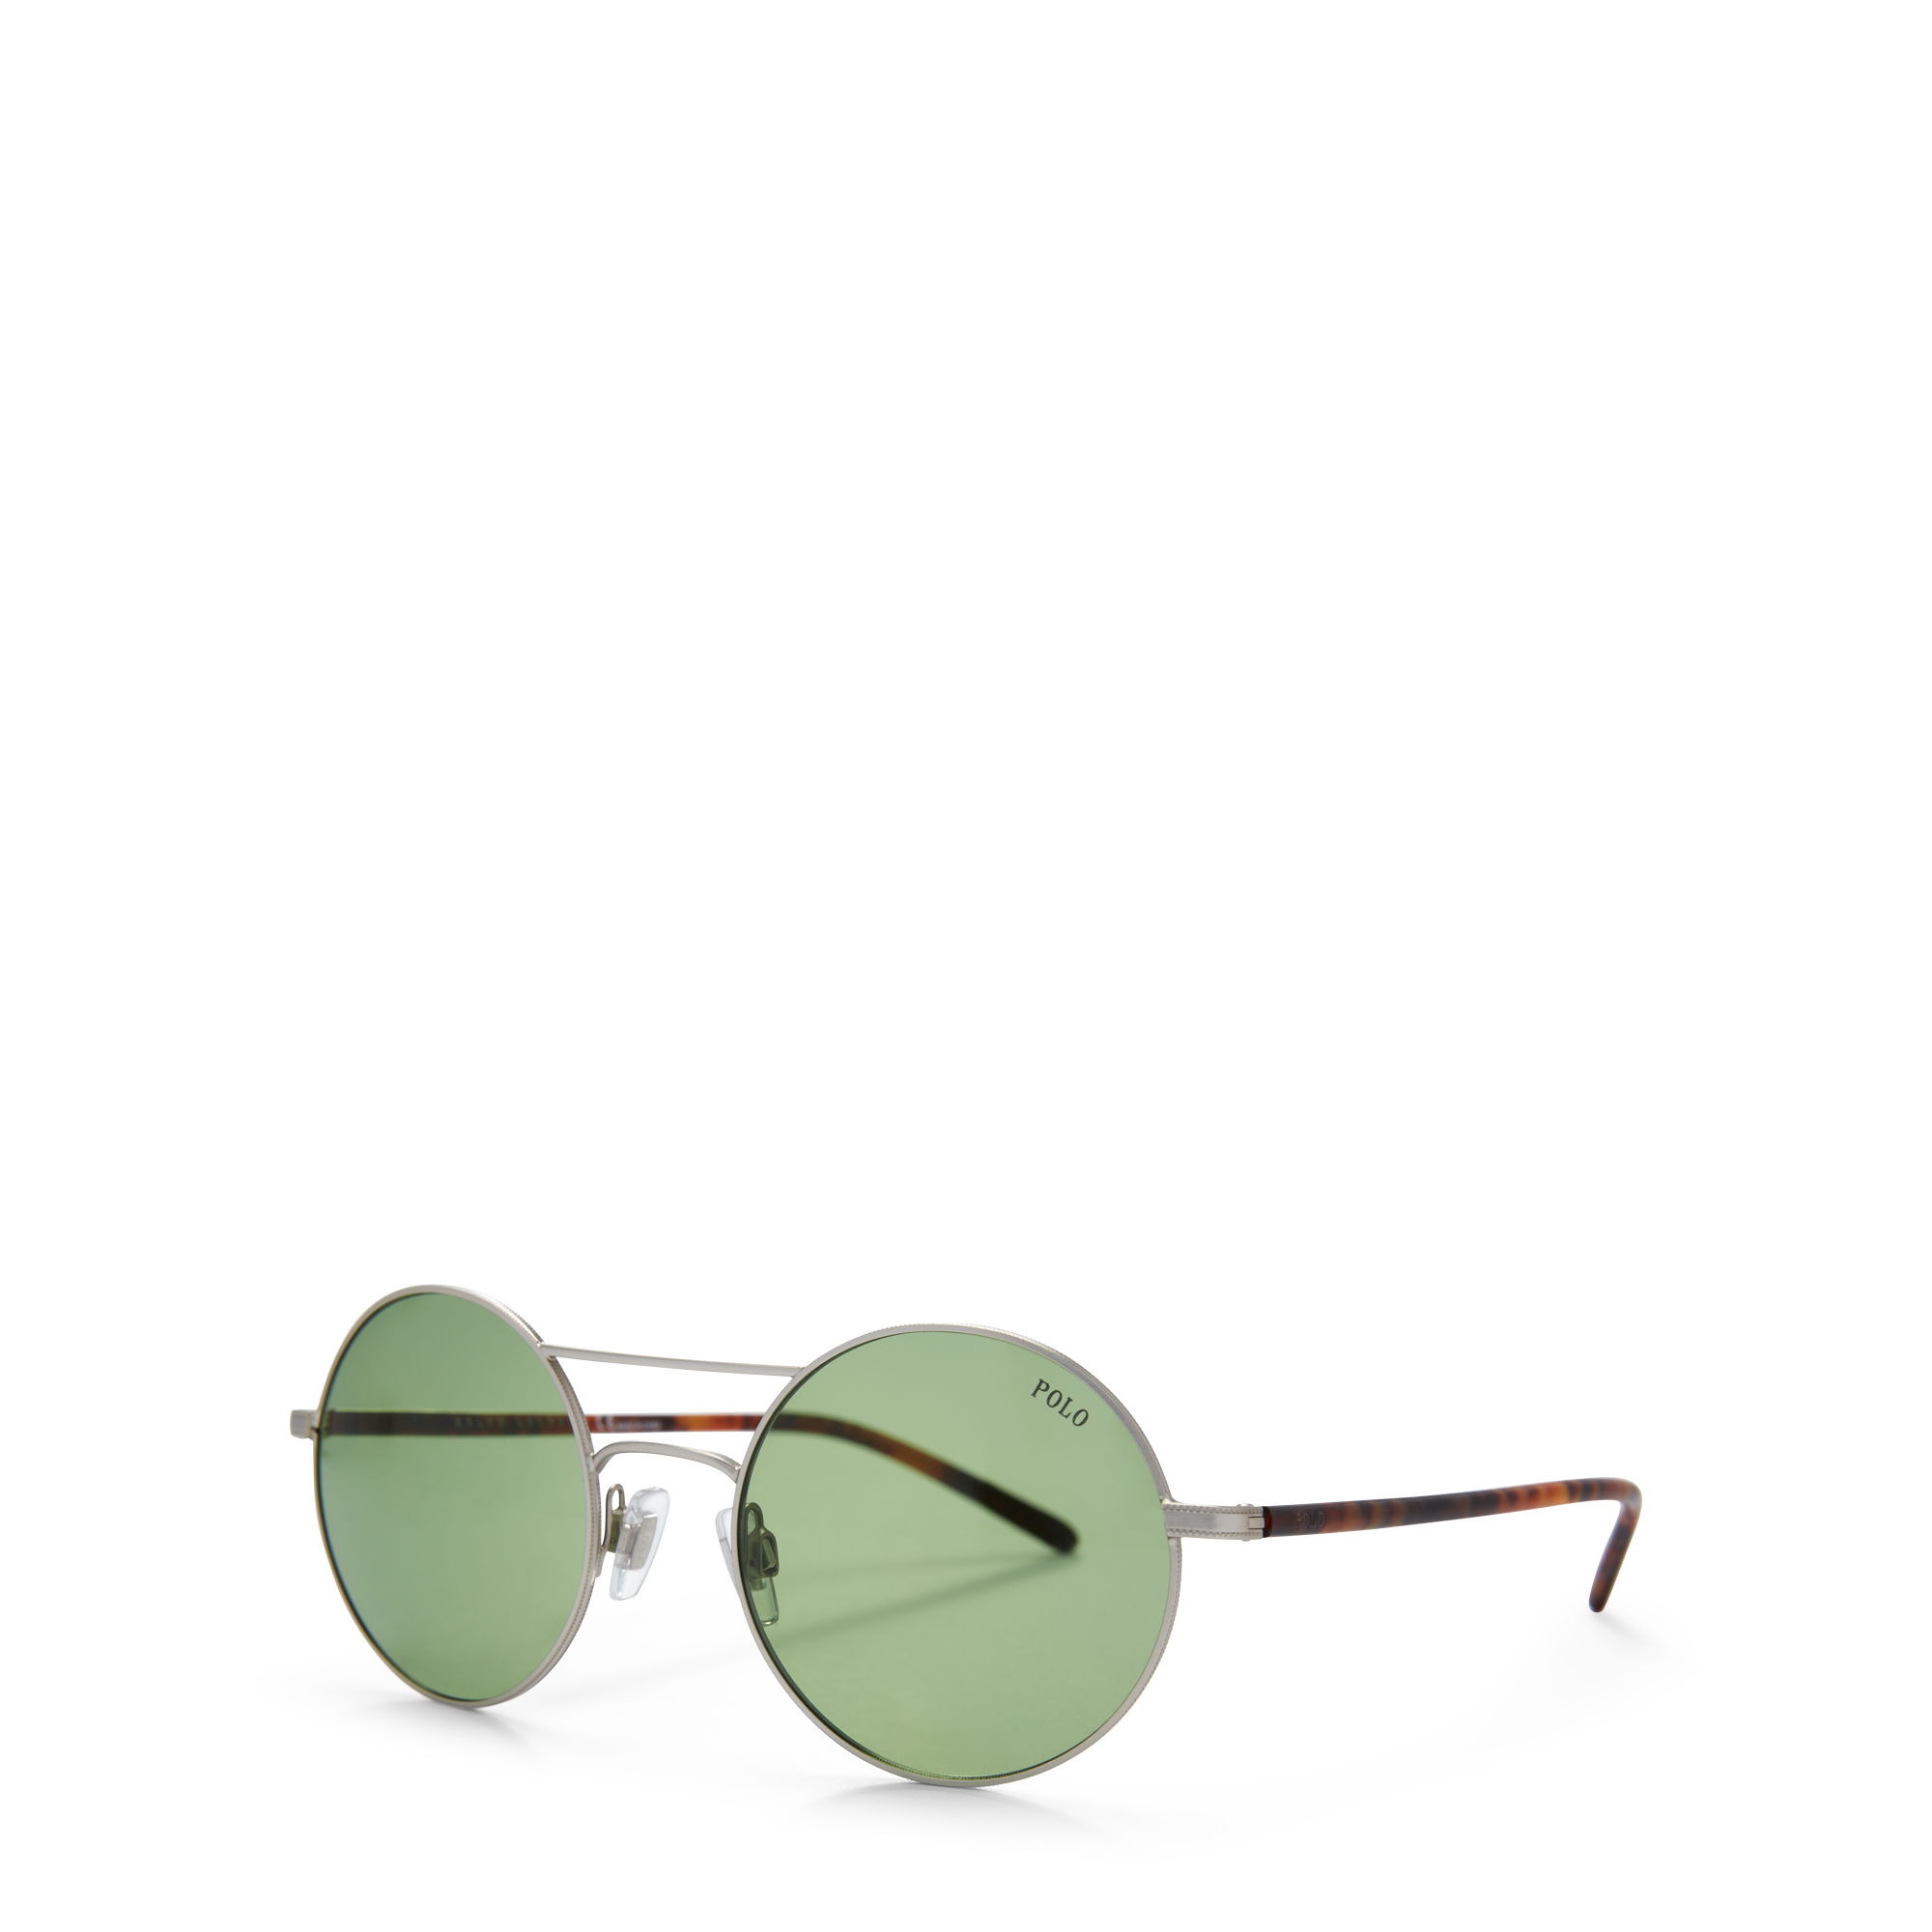 Ralph Lauren Double-Bridge Round Sunglasses. 2